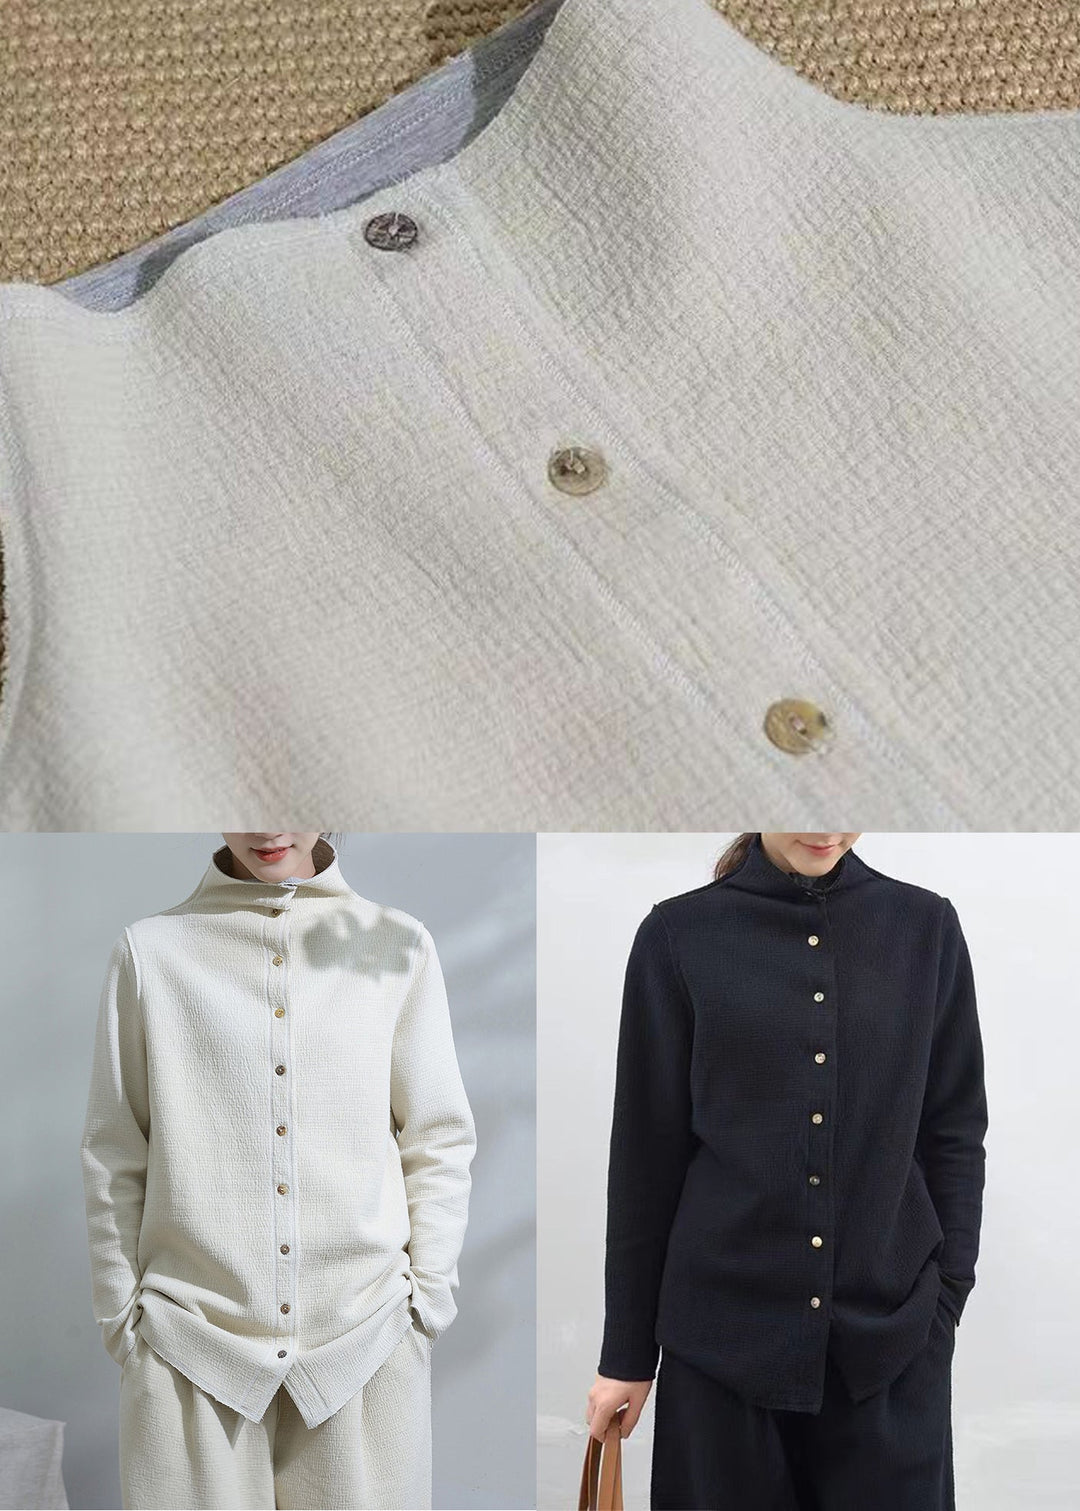 Unique White Stand Collar Button Patchwork Cotton Coats Fall